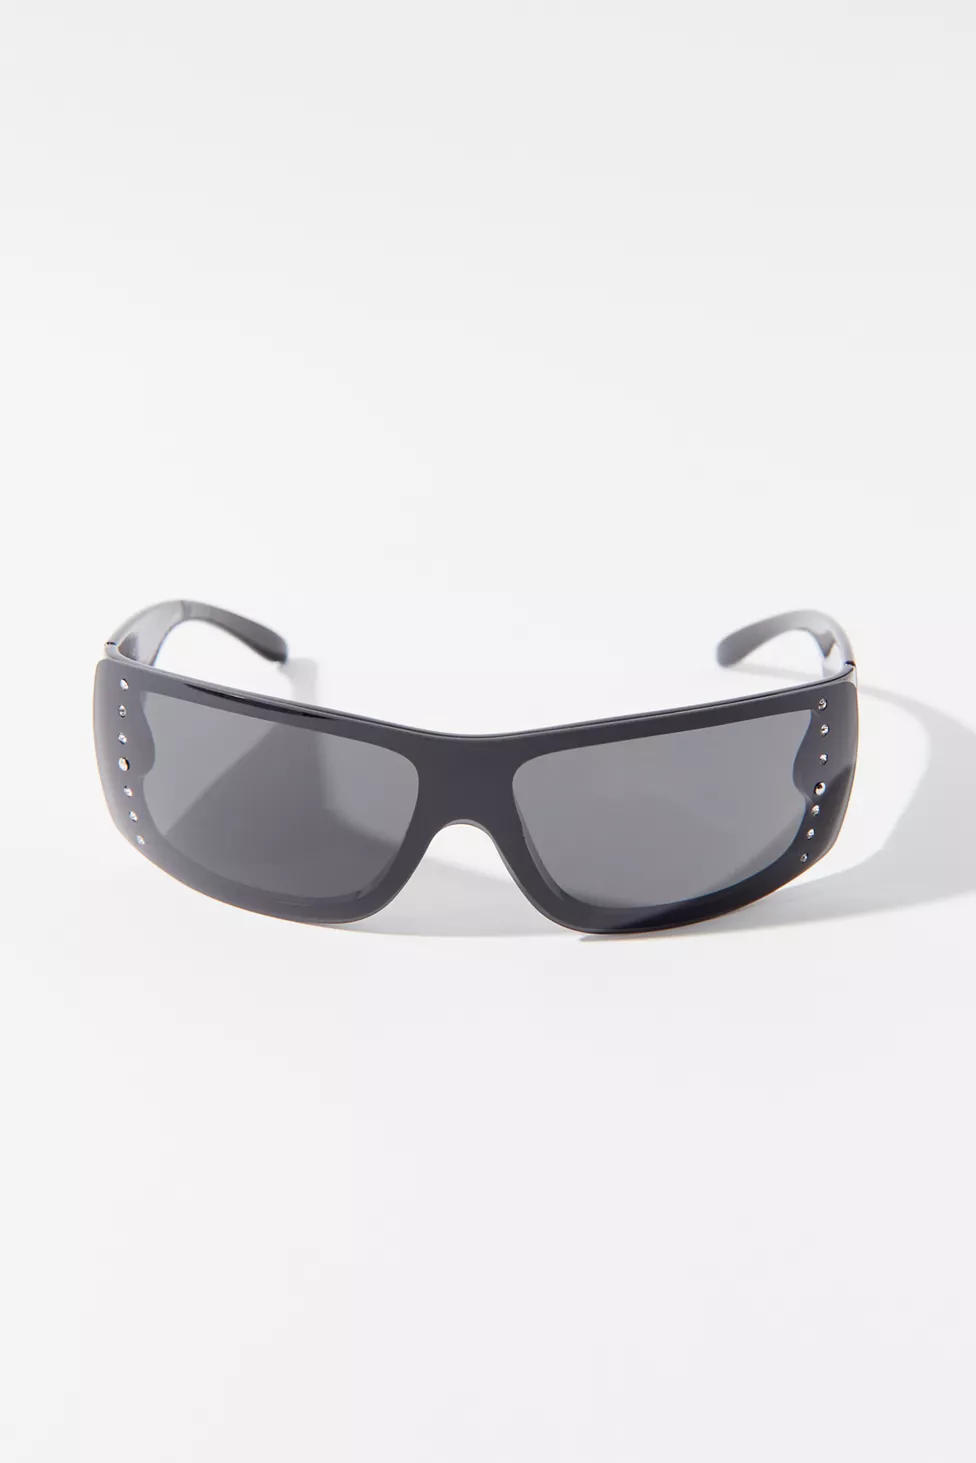 urbanoutfitters.com | Roxanne Shield Sunglasses